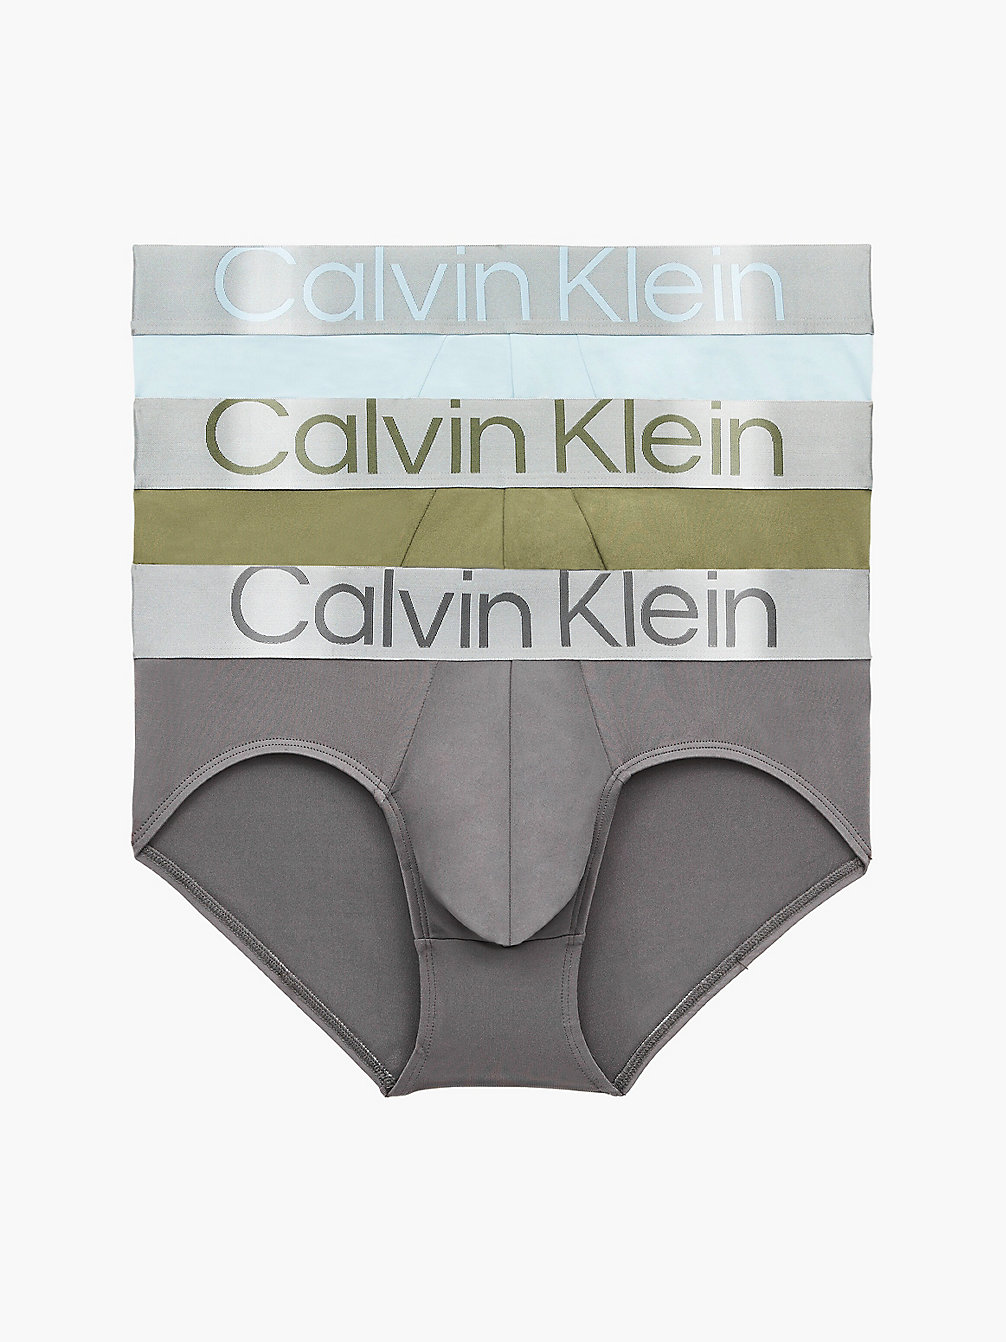 NAPA/ PALEST BLUE/ GREY SKY Lot De 3 Slips - Steel Micro undefined hommes Calvin Klein